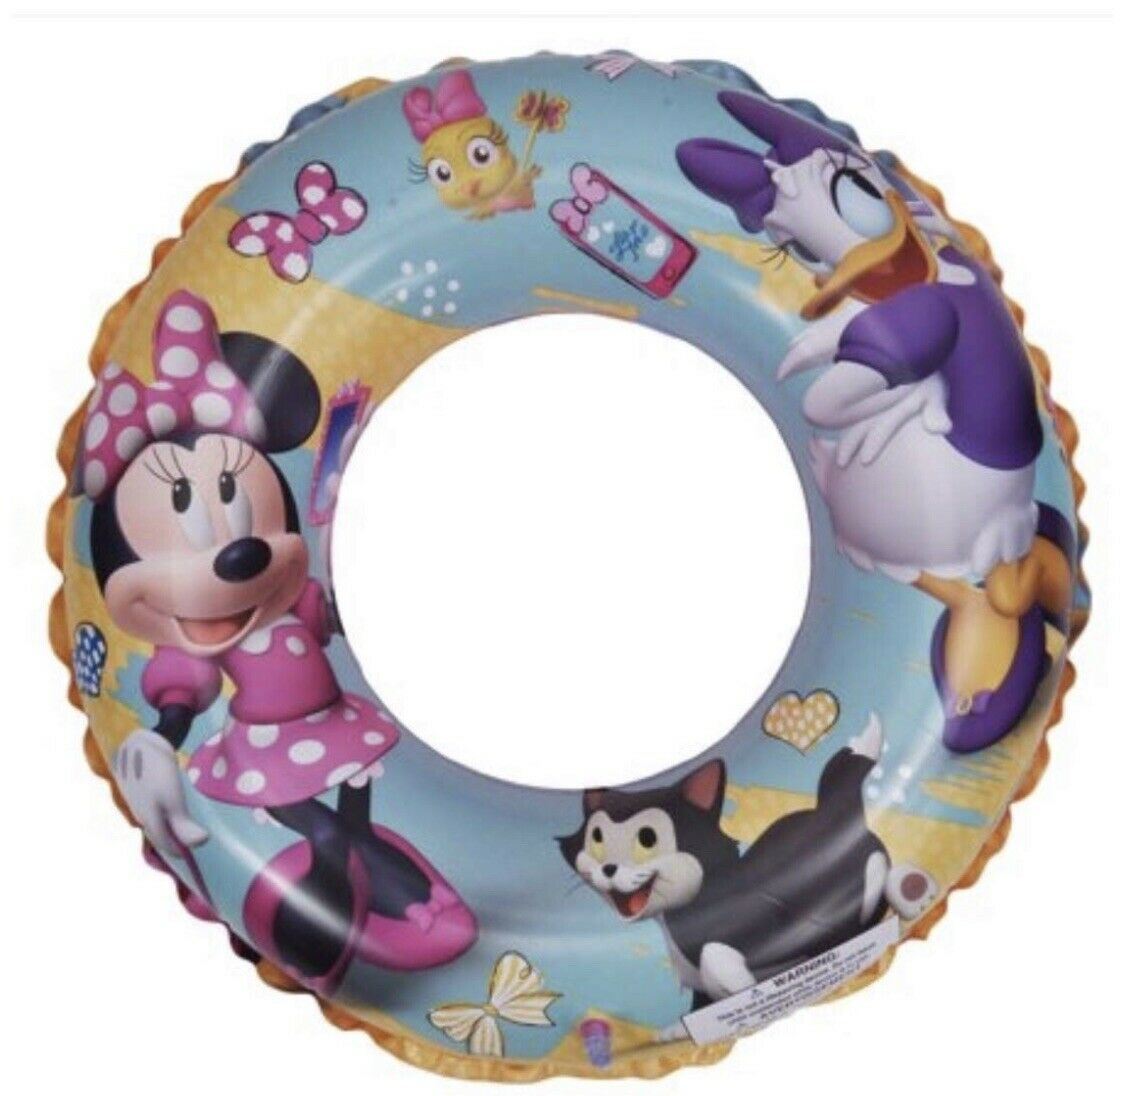 Disney Jr. Minnie - 5 Piece Swim Set, Included: Goggles, Swim Ring, Beach Ball & Arm Floats